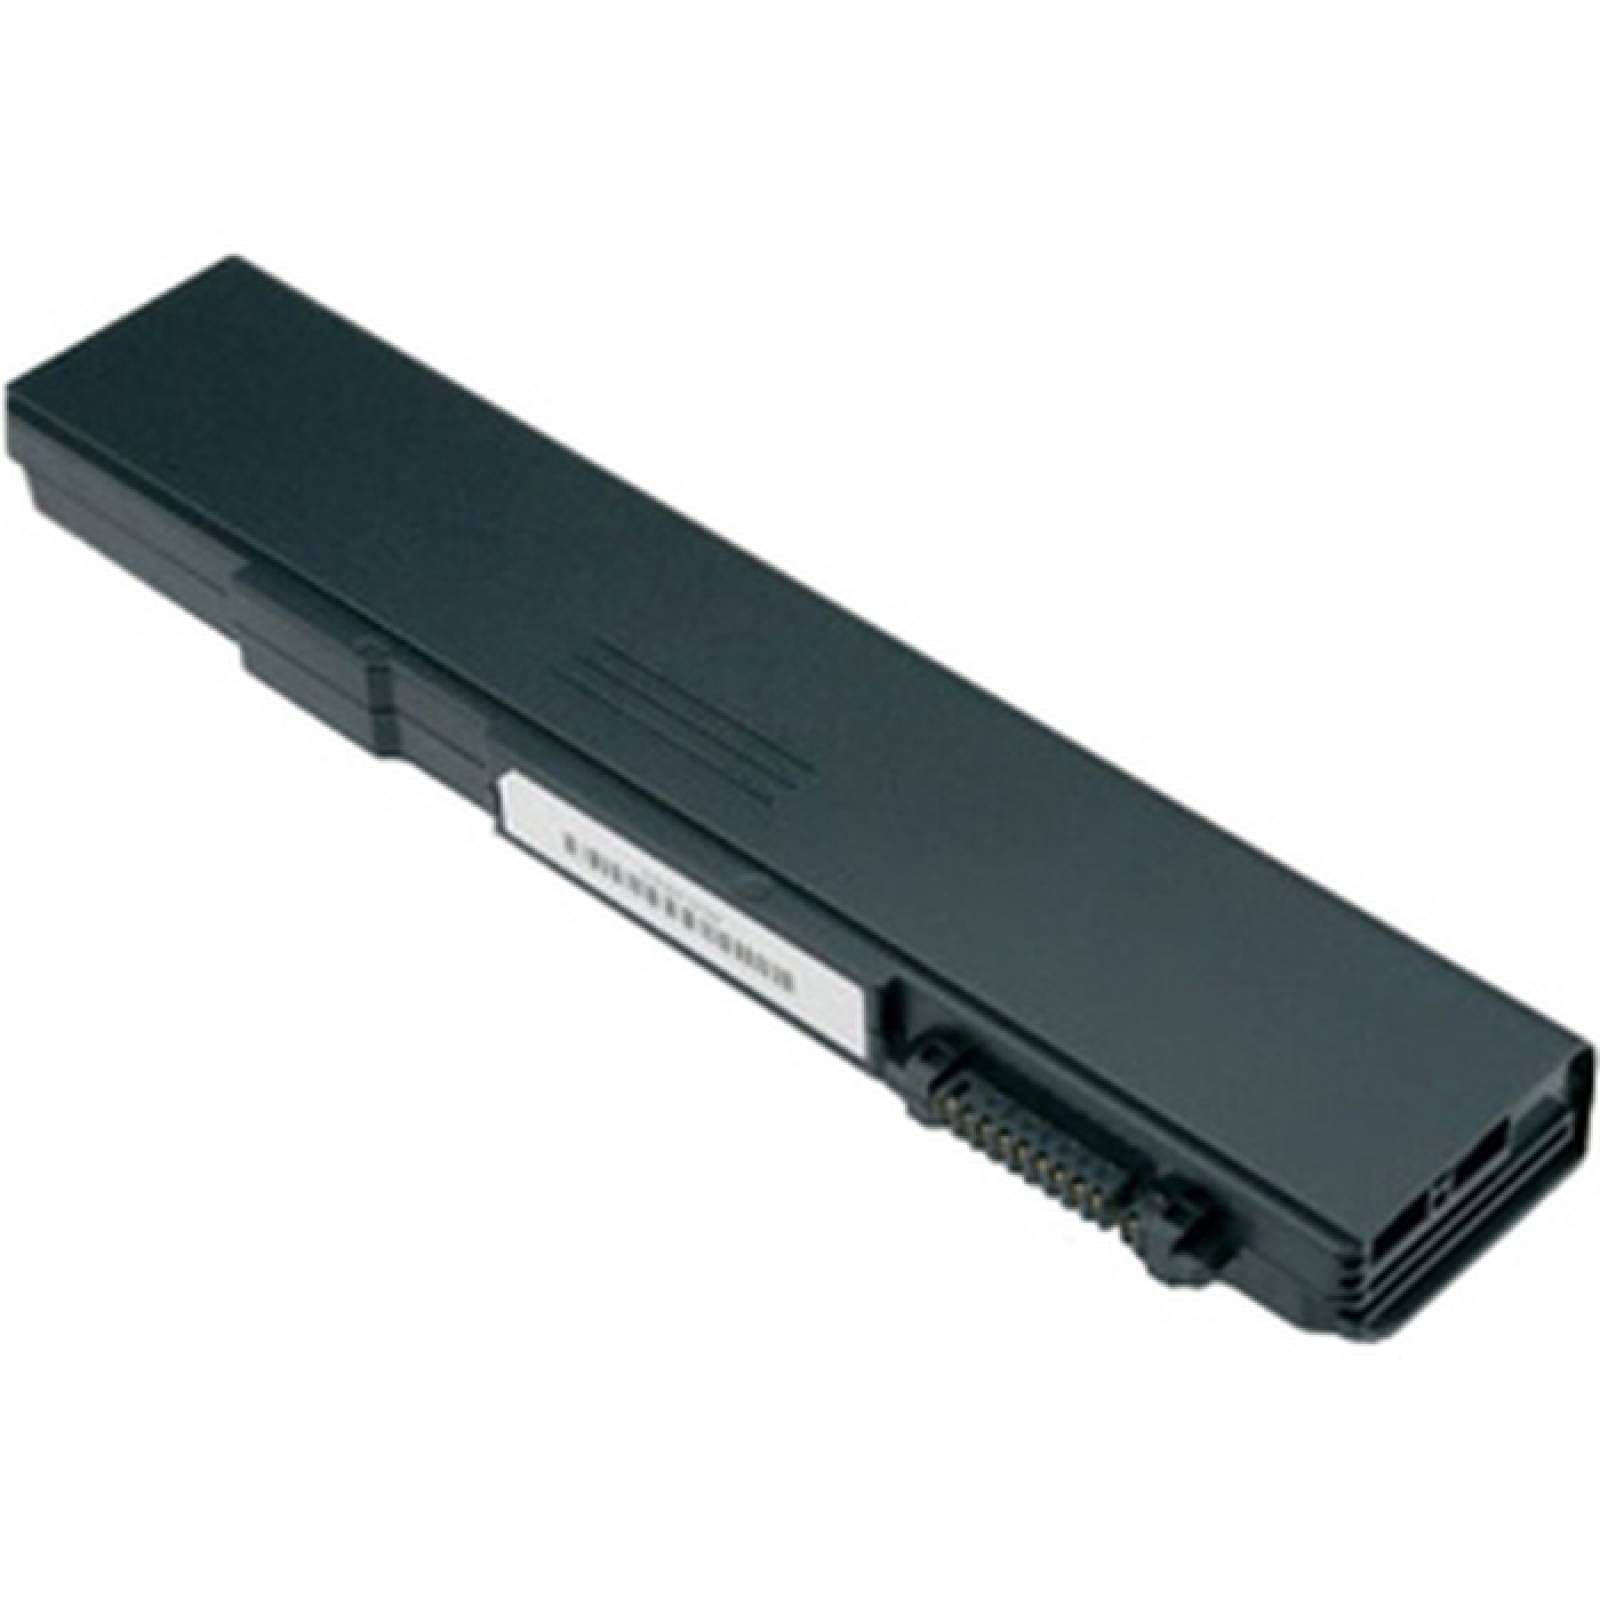 Toshiba PA3788U1BRS Notebook Battery